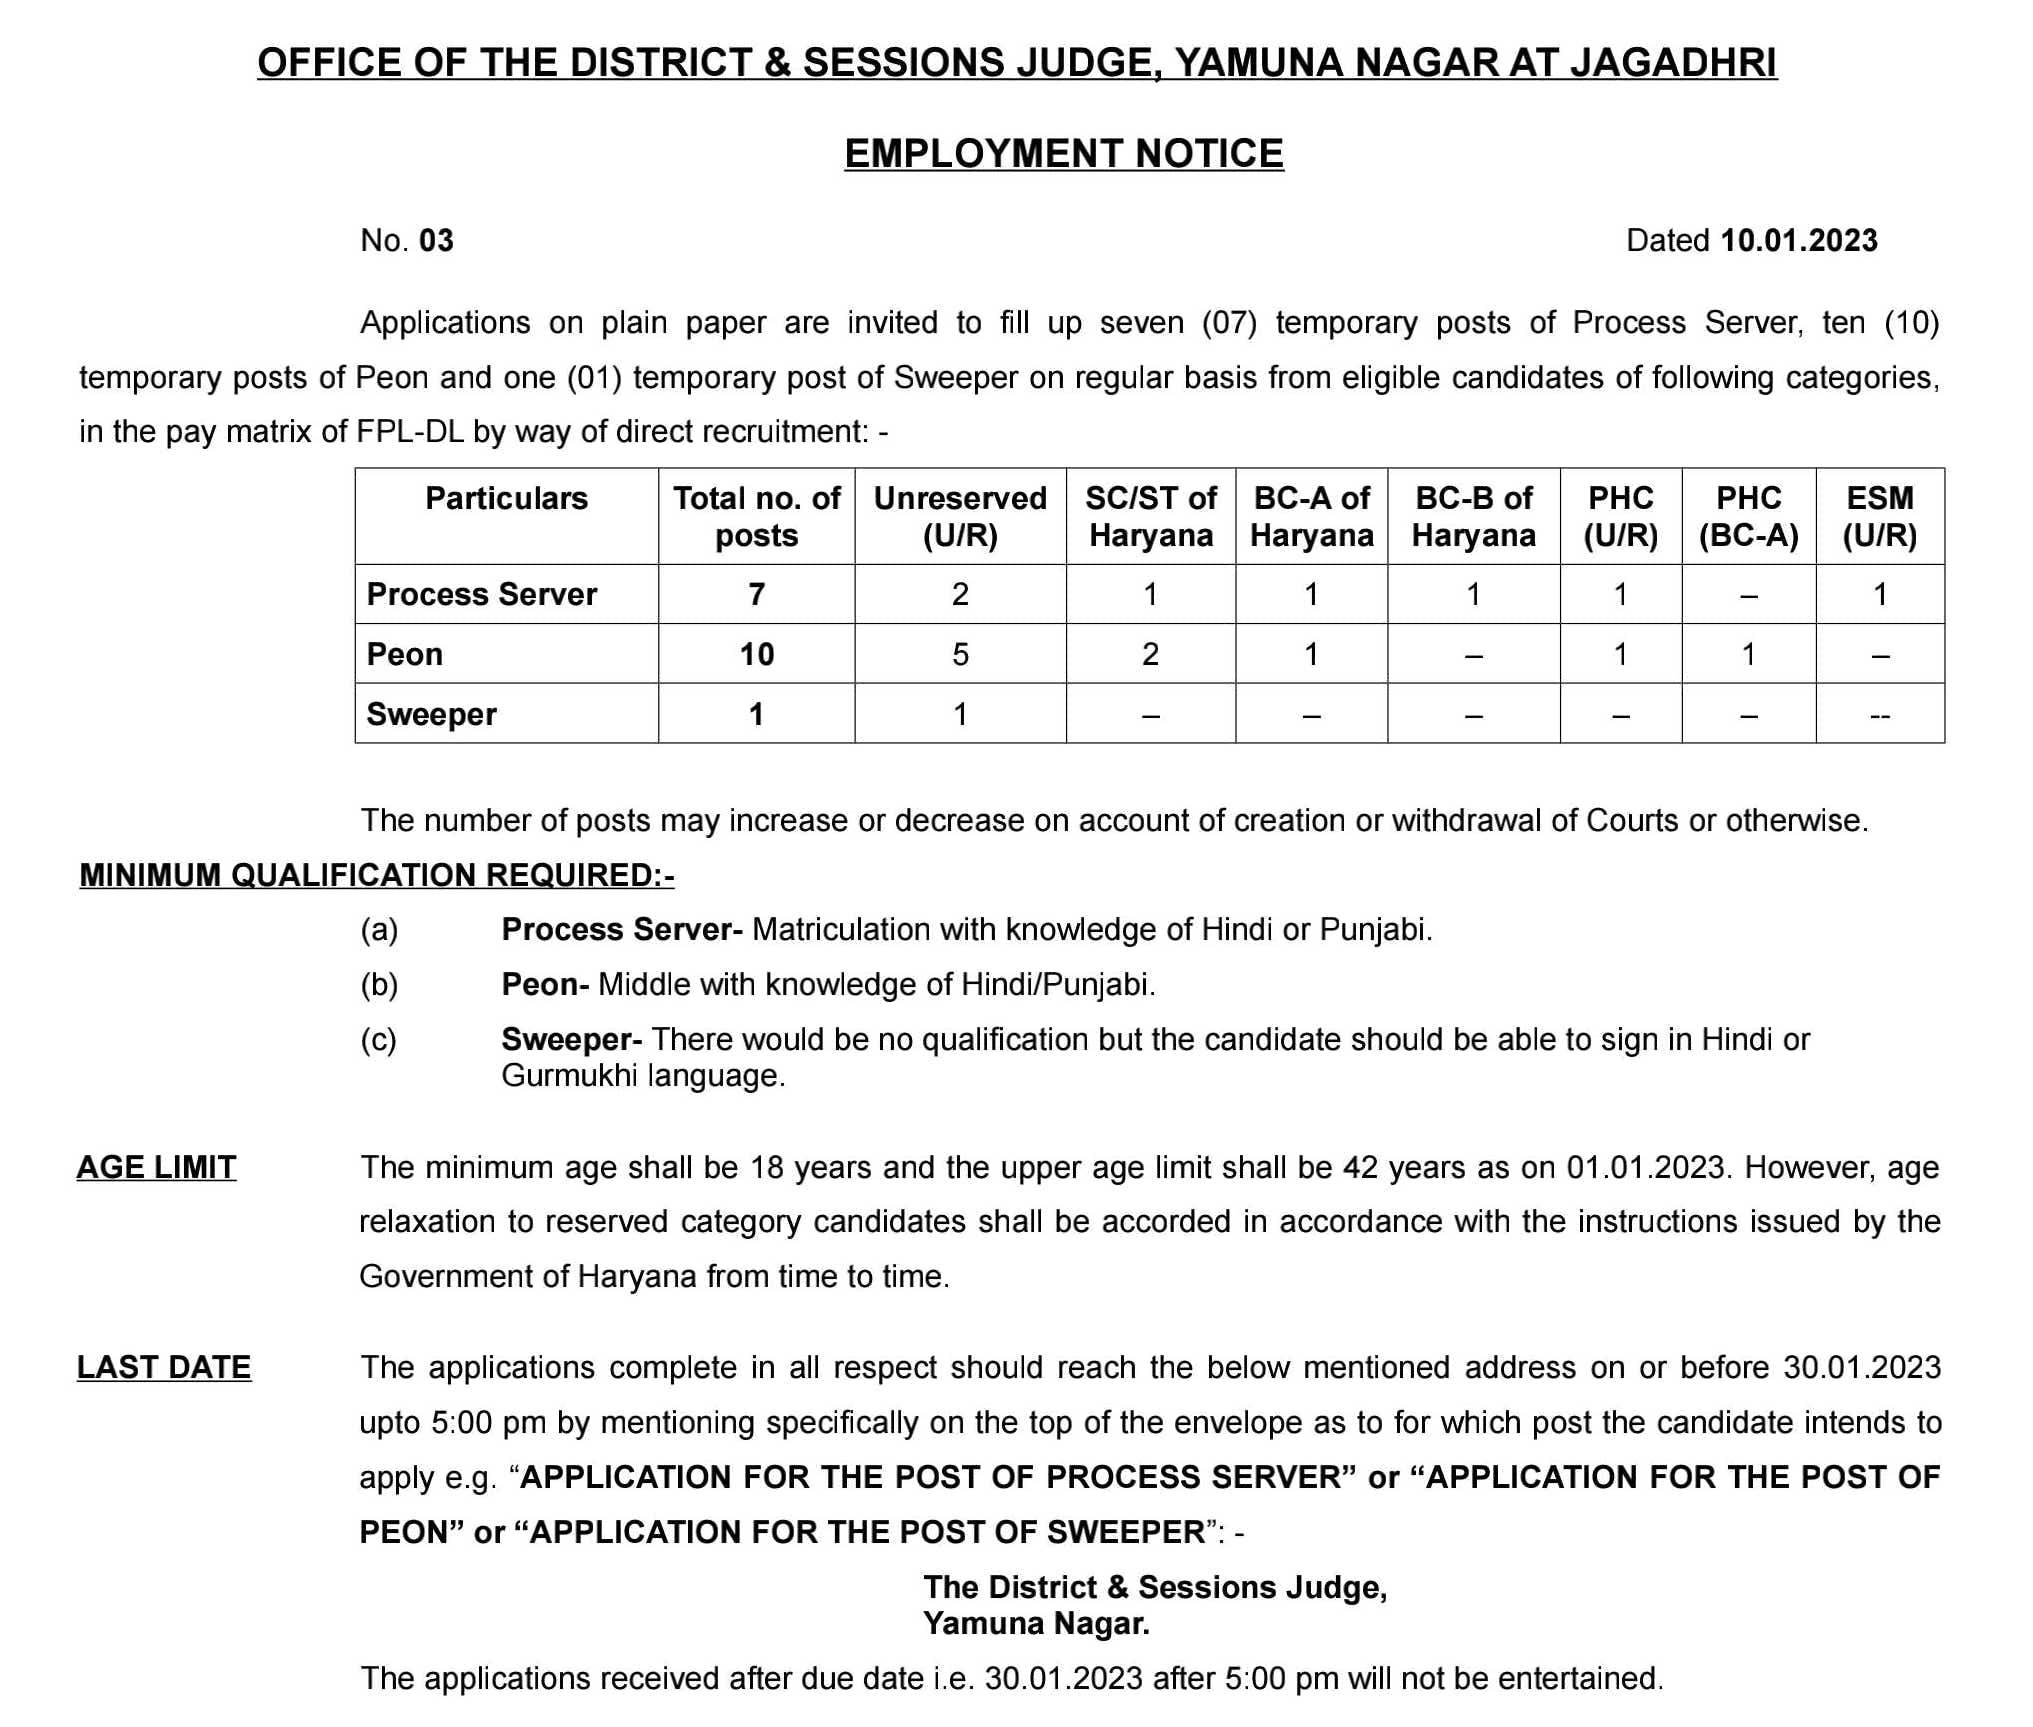 Yamunanagar Court Recruitment 2023